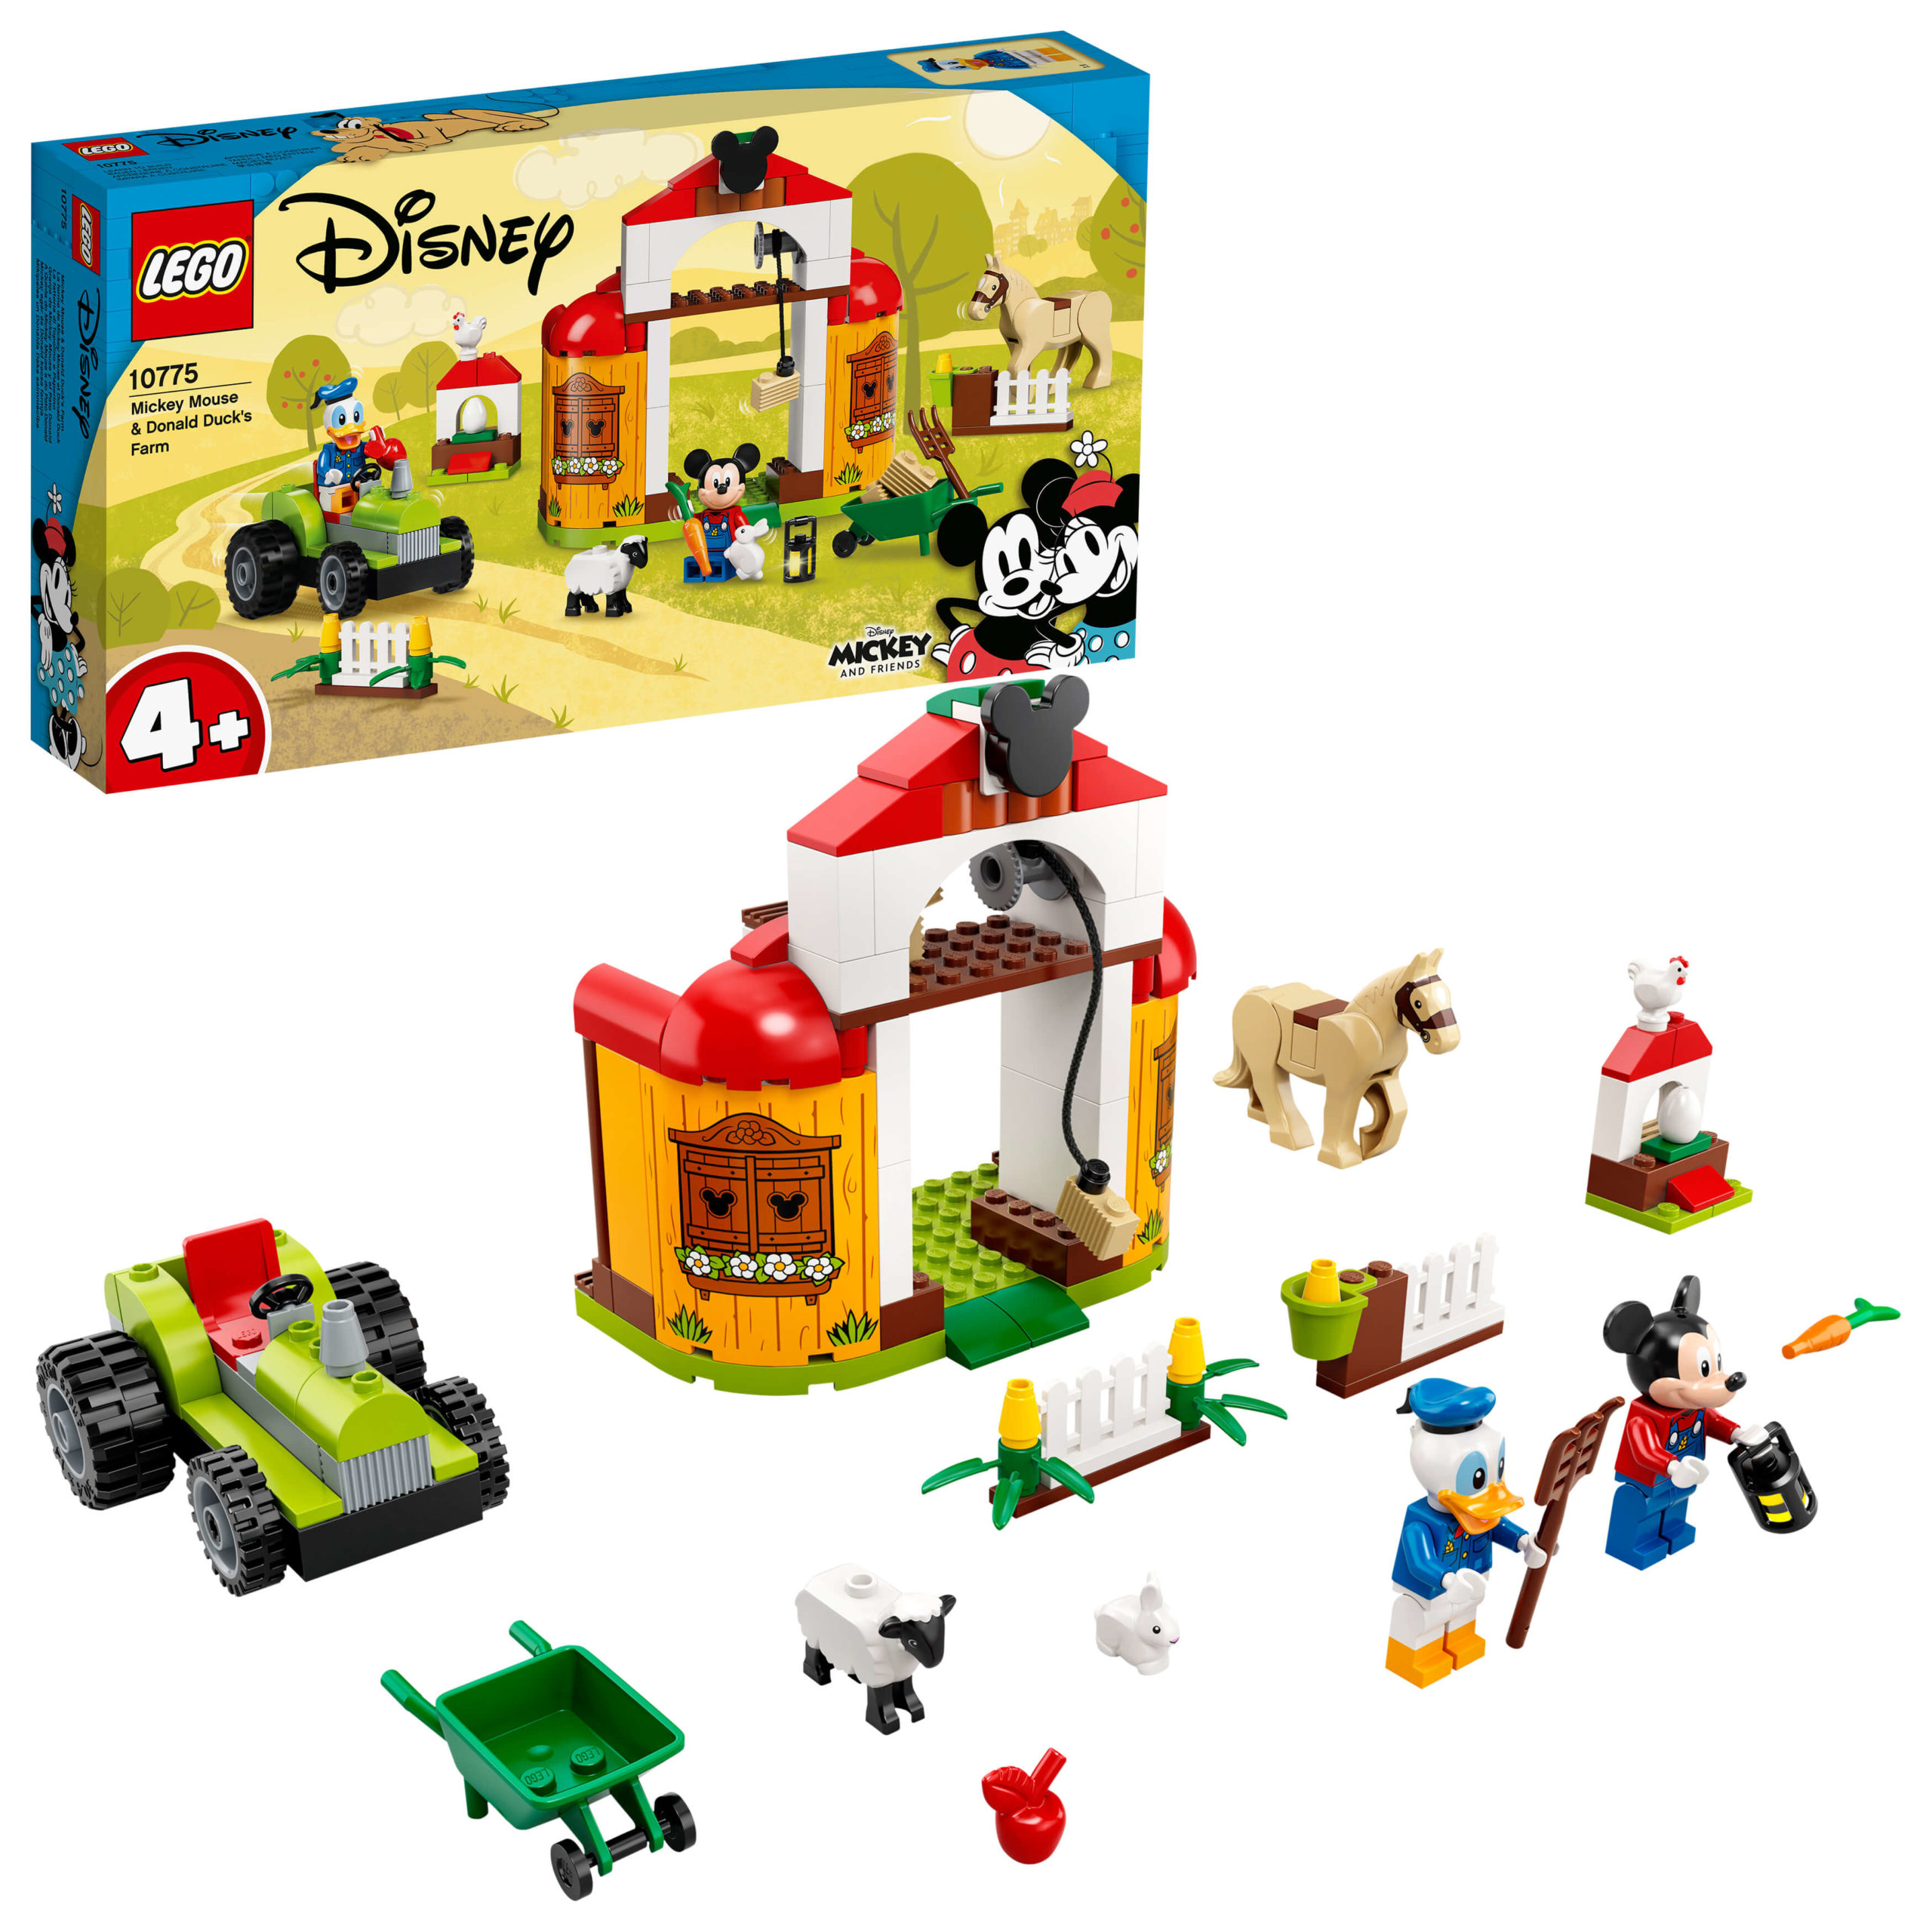 LEGO Disney Mickey Mouse & Donald Duck's Farm 10775 - LEGO, LEGO Disney